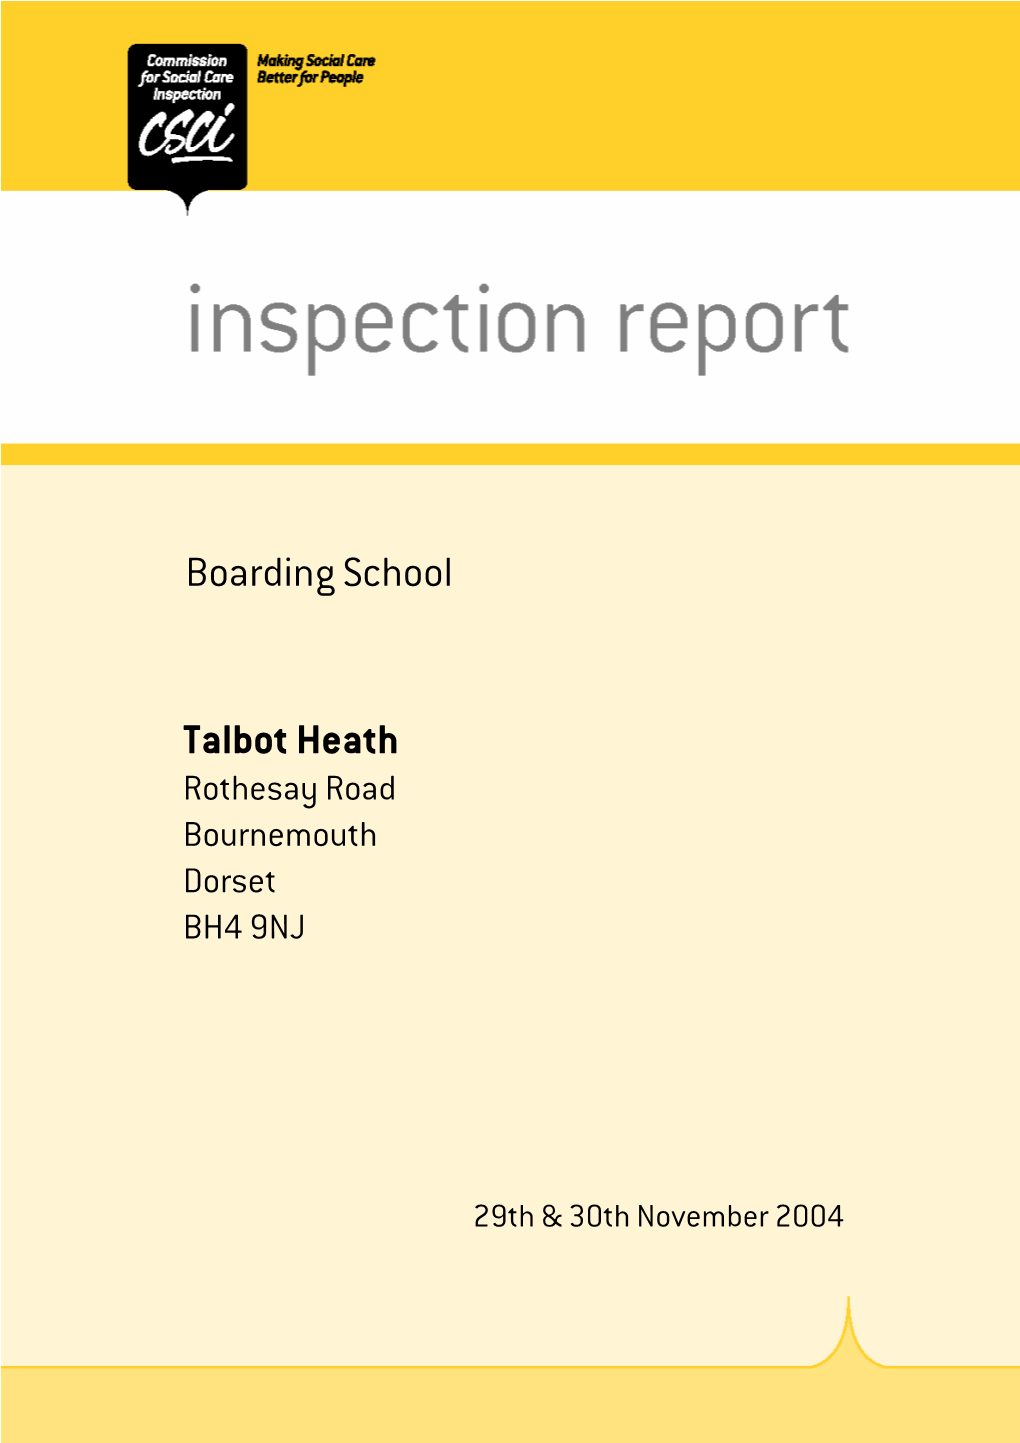 Talbot Heath Boarding School